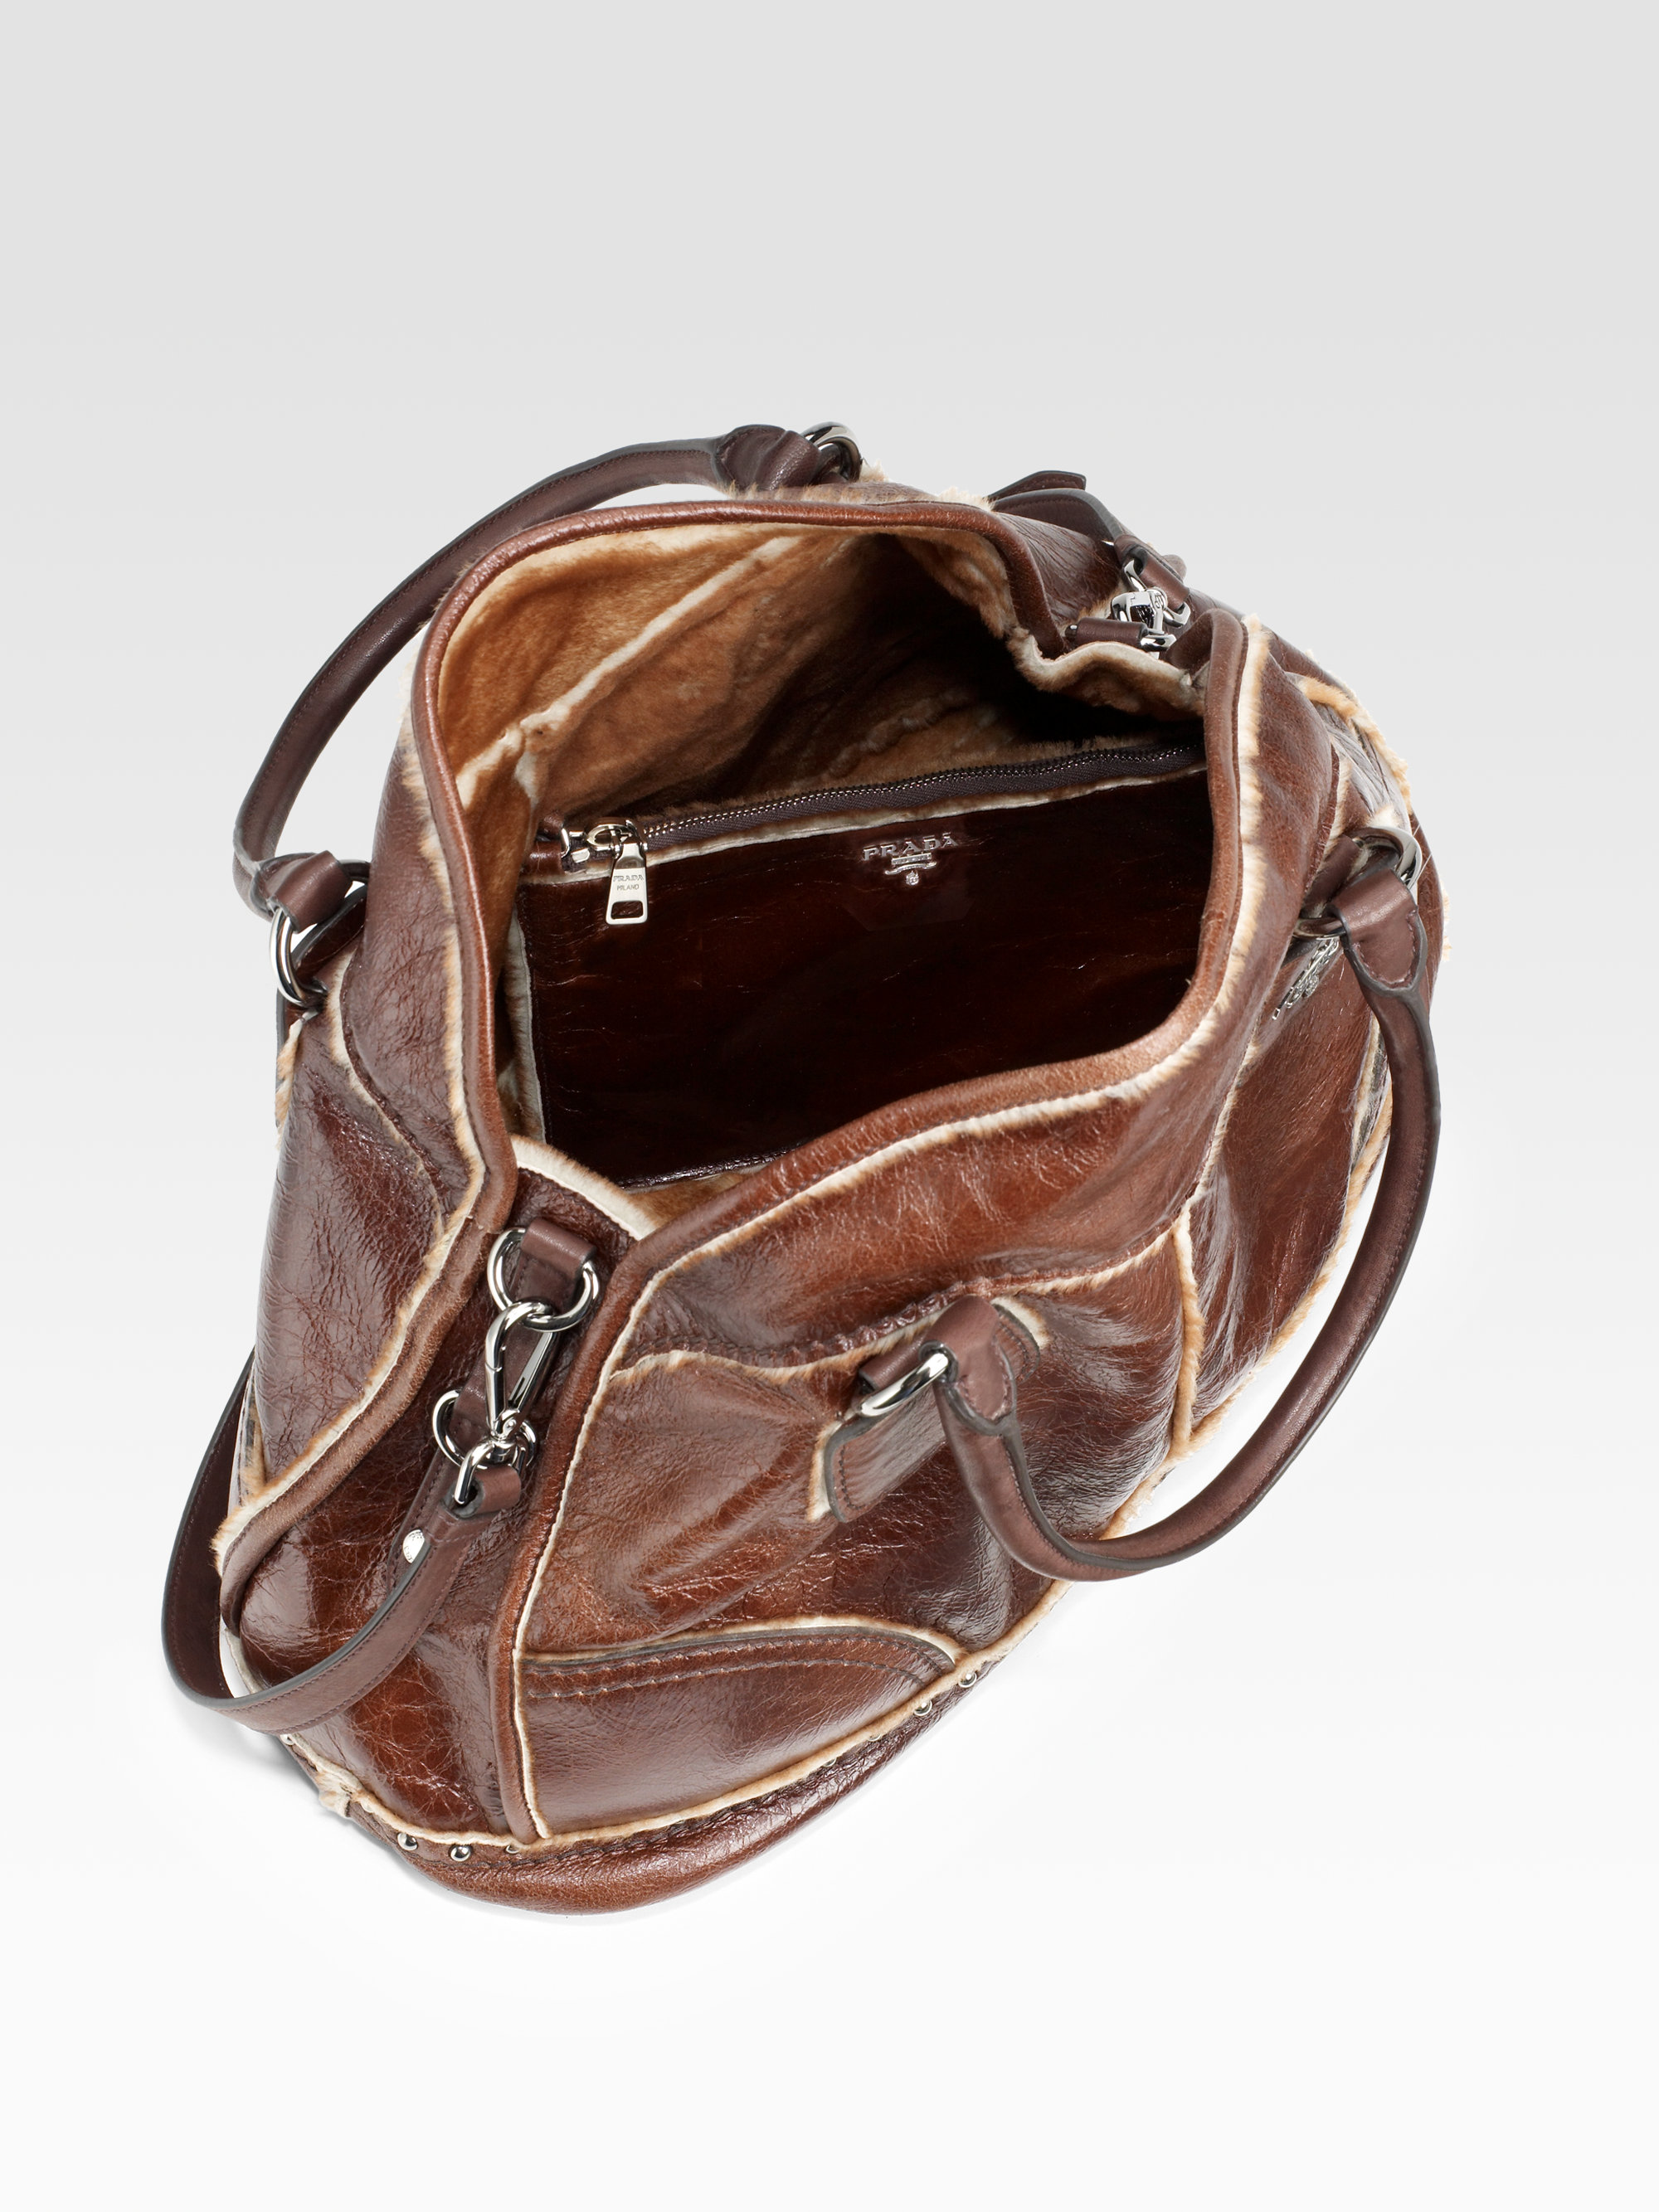 prada clutch black - Prada Shearling Bowler Bag in Brown (tobacco) | Lyst